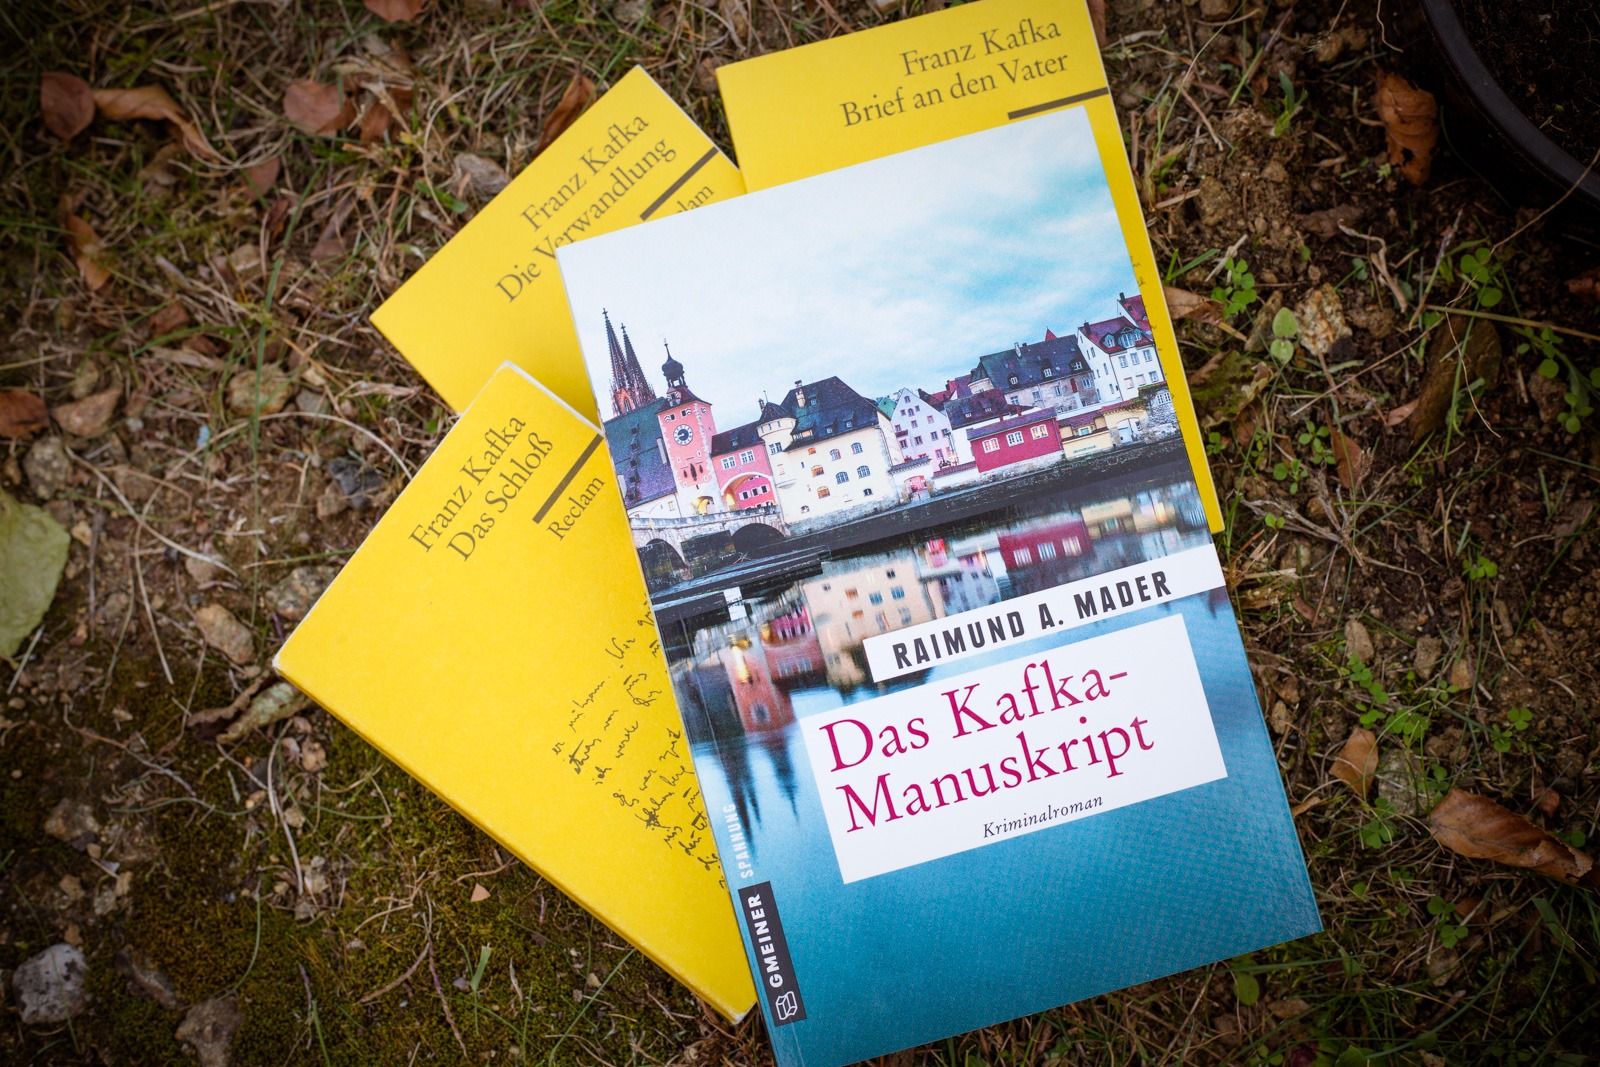 Das Kafka Manuskript - Raimund A. Mader